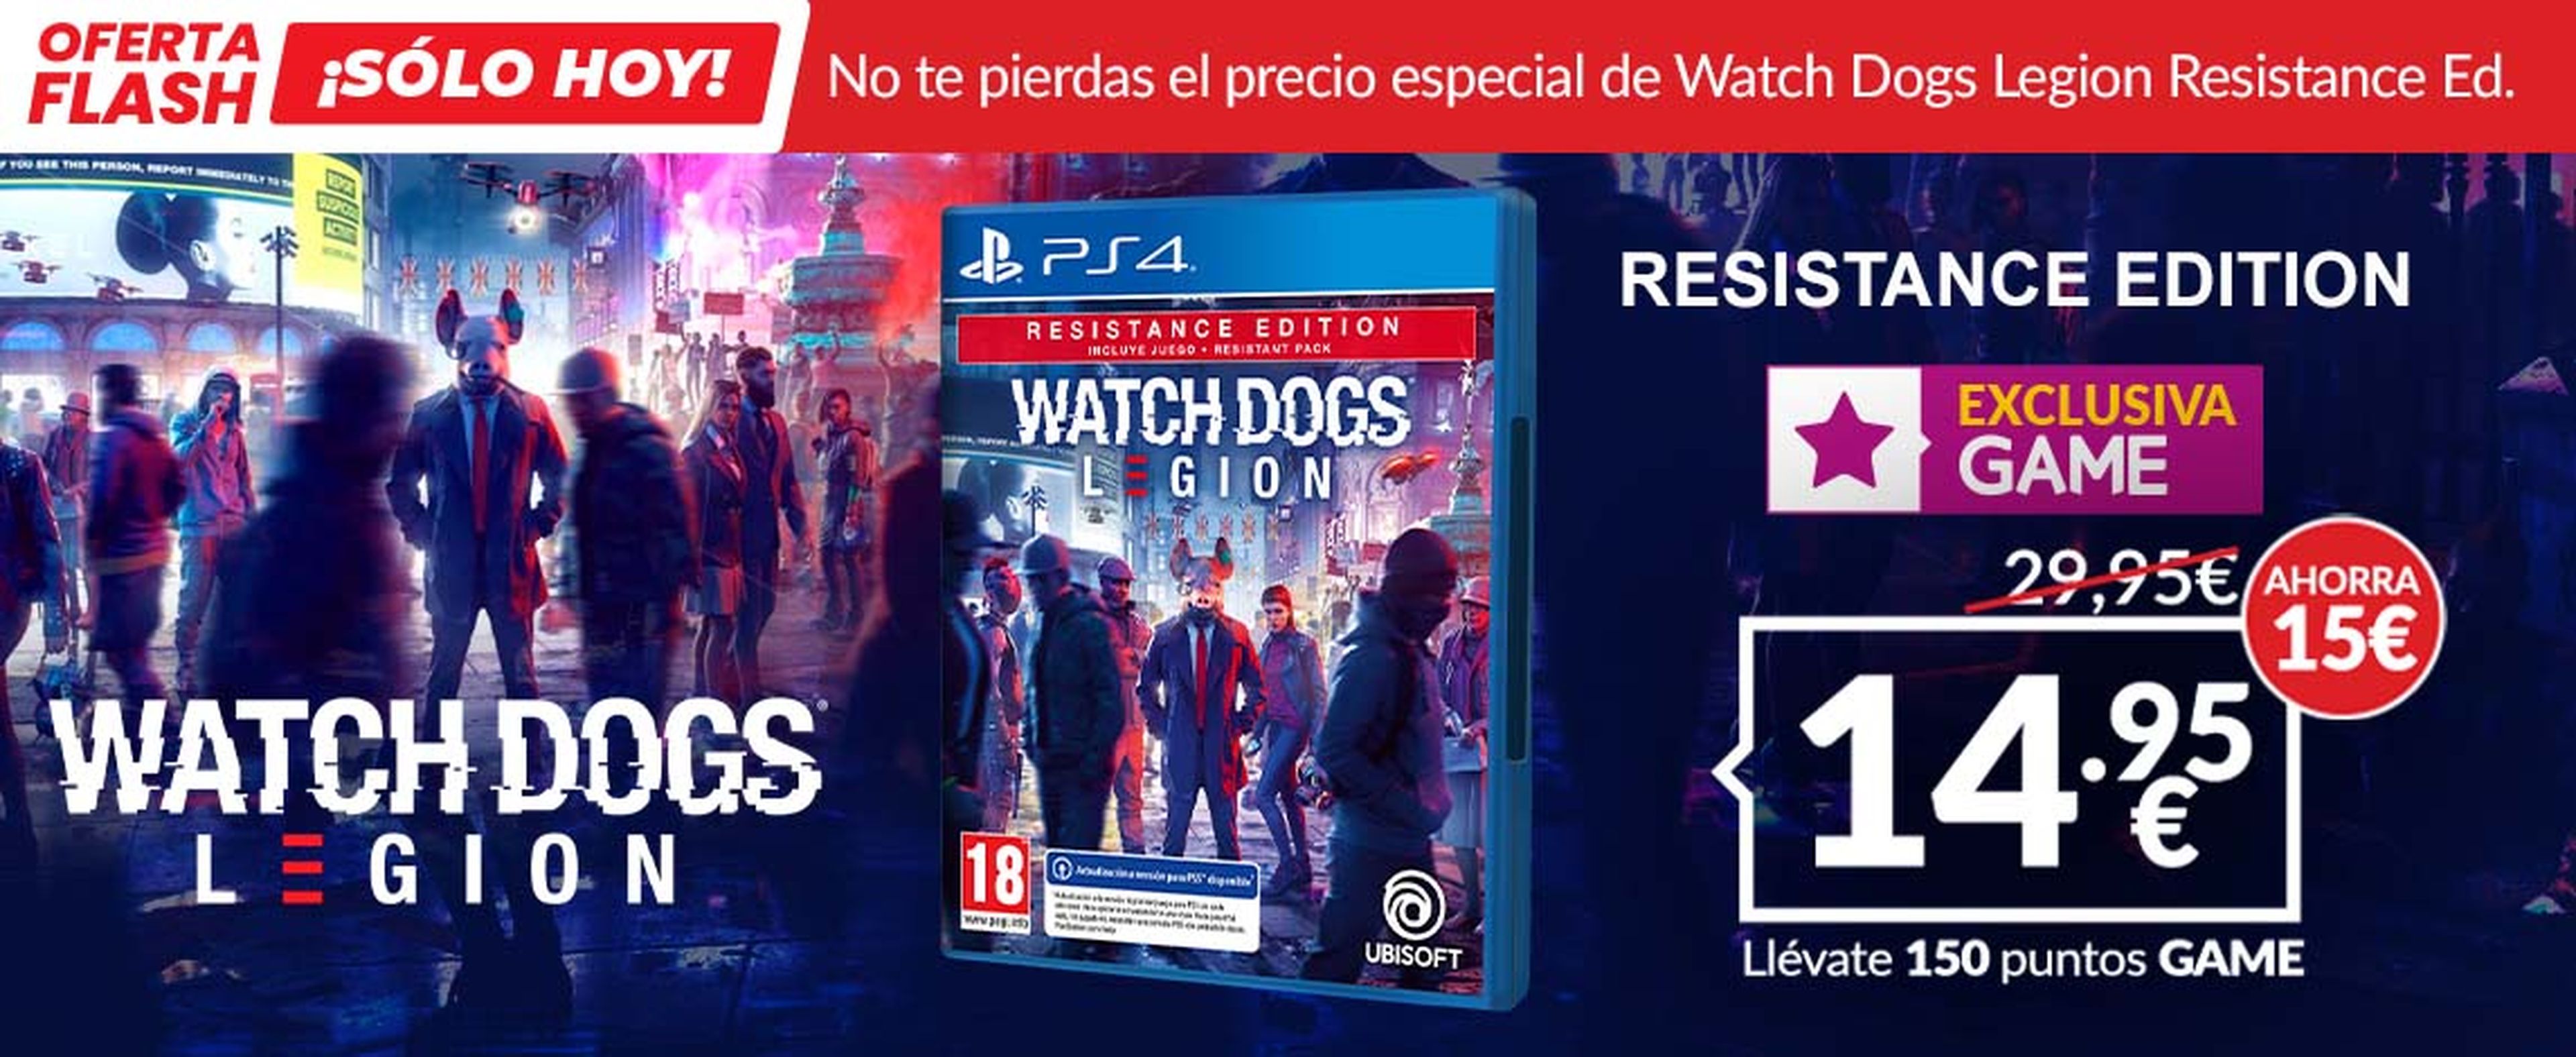 Oferta Flash de GAME: Watch Dogs Legion Resistance Edition por 14